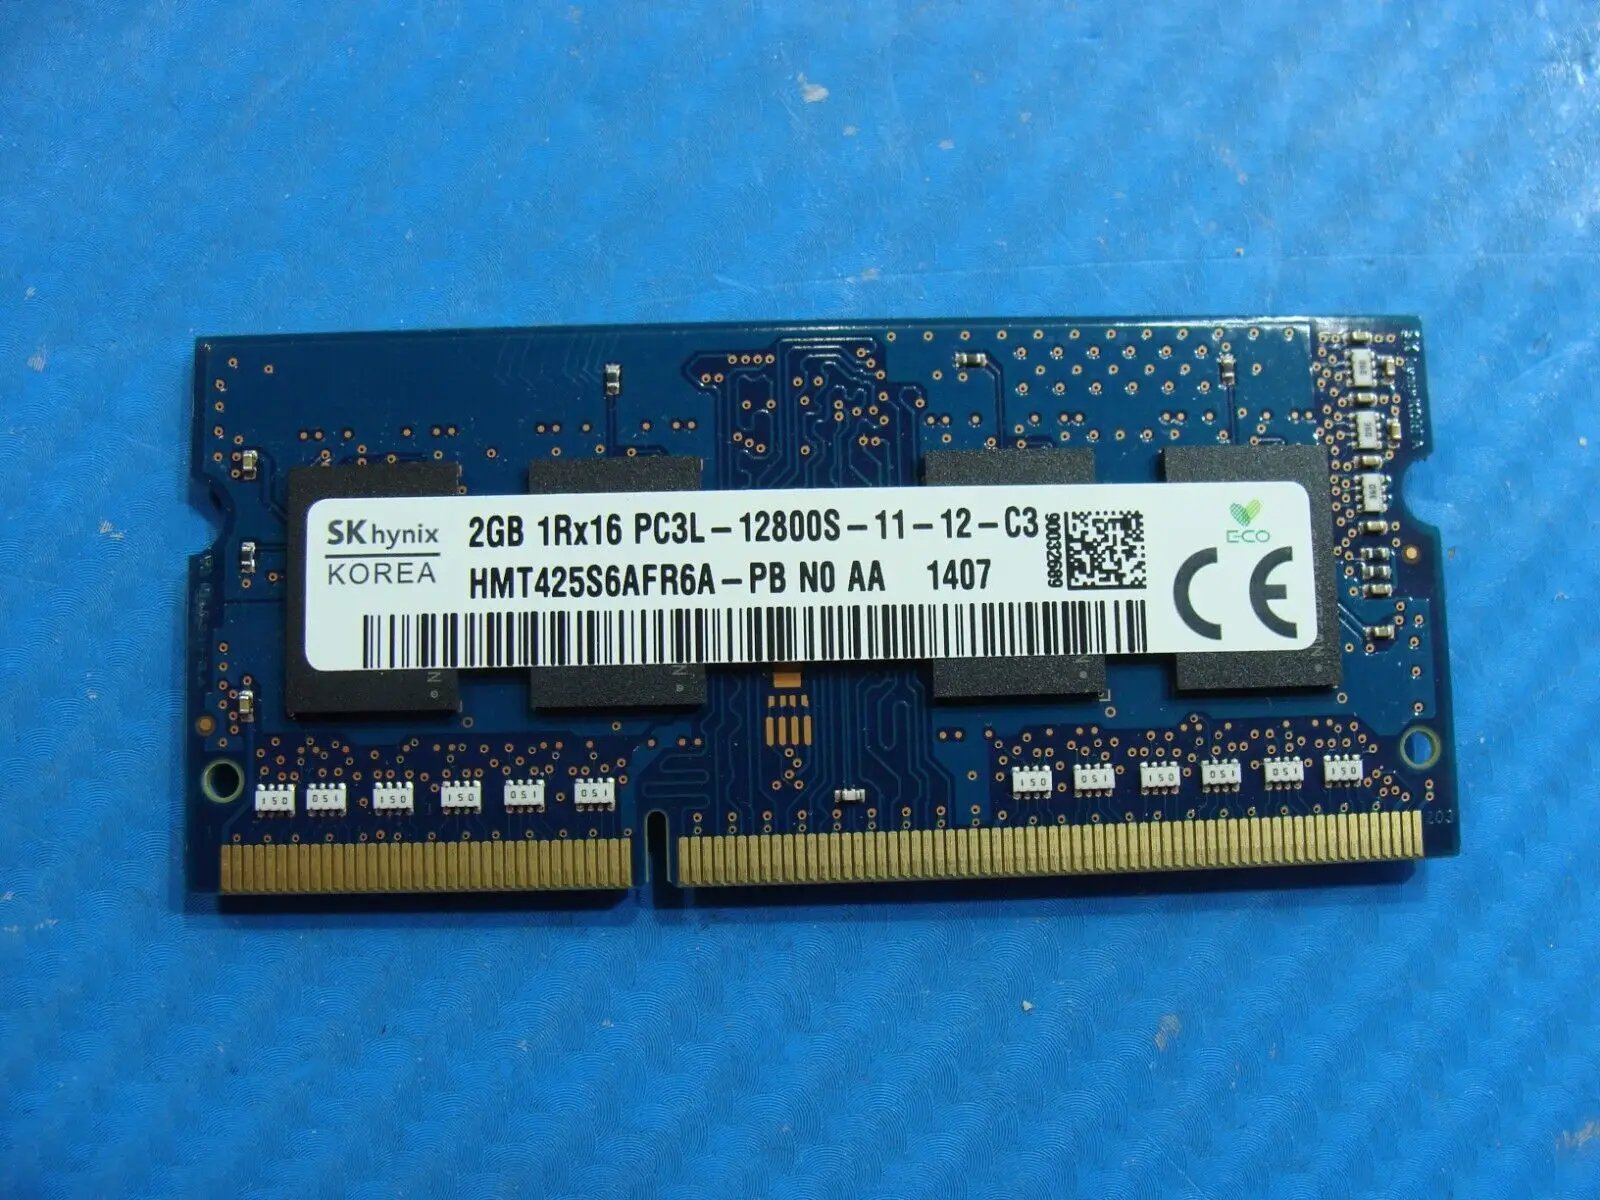 Toshiba E45t-A4100 SK Hynix 2GB 1Rx16 PC3L-12800S Memory RAM HMT425S6CFR6A-PB